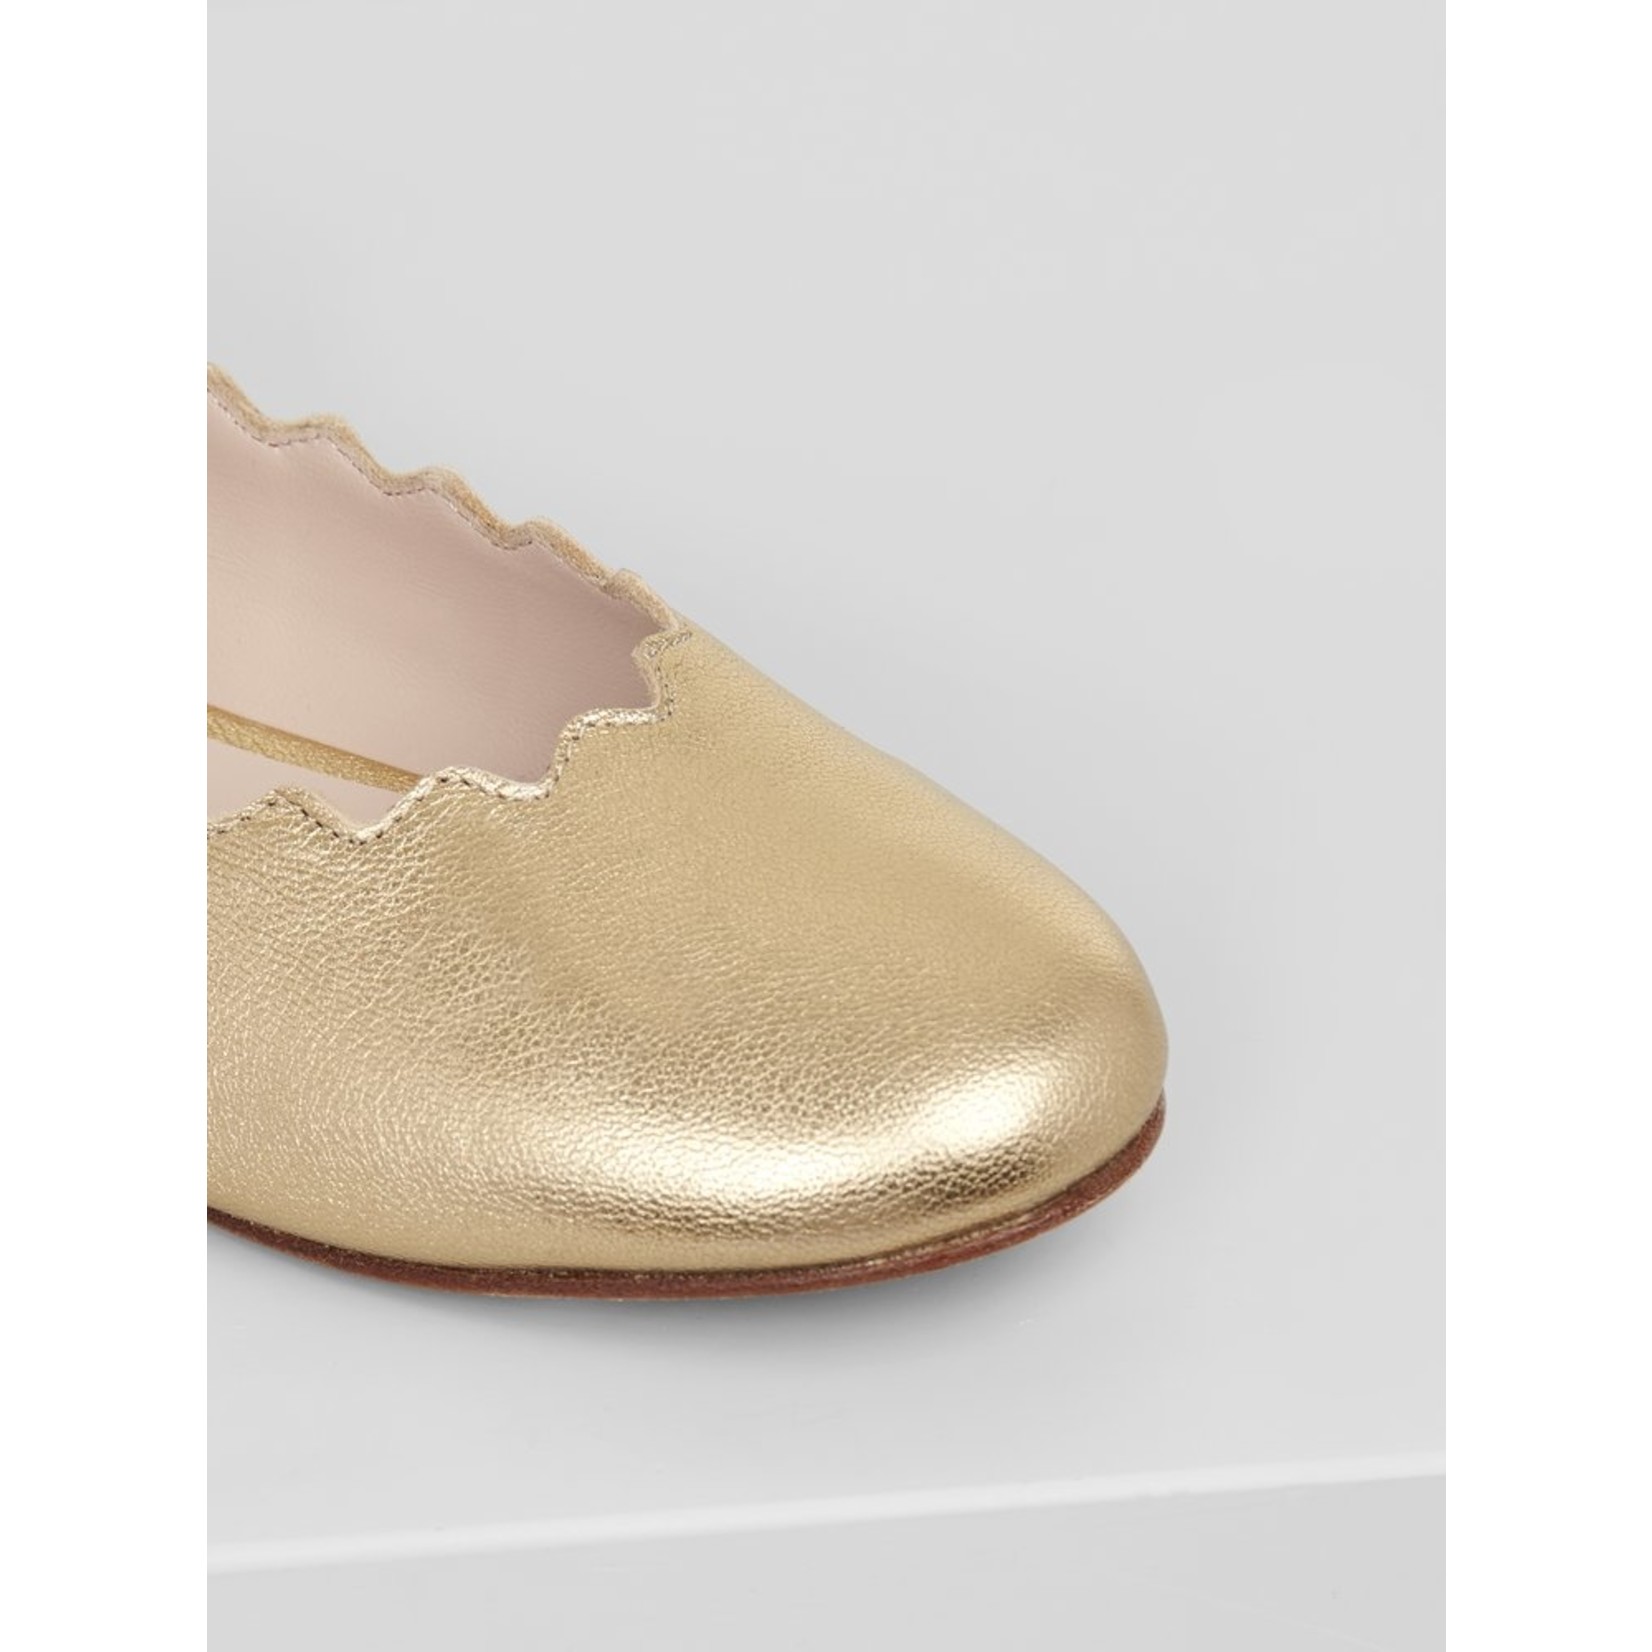 Chloe Chloe-ss21 Ballerina shoes 100% leather